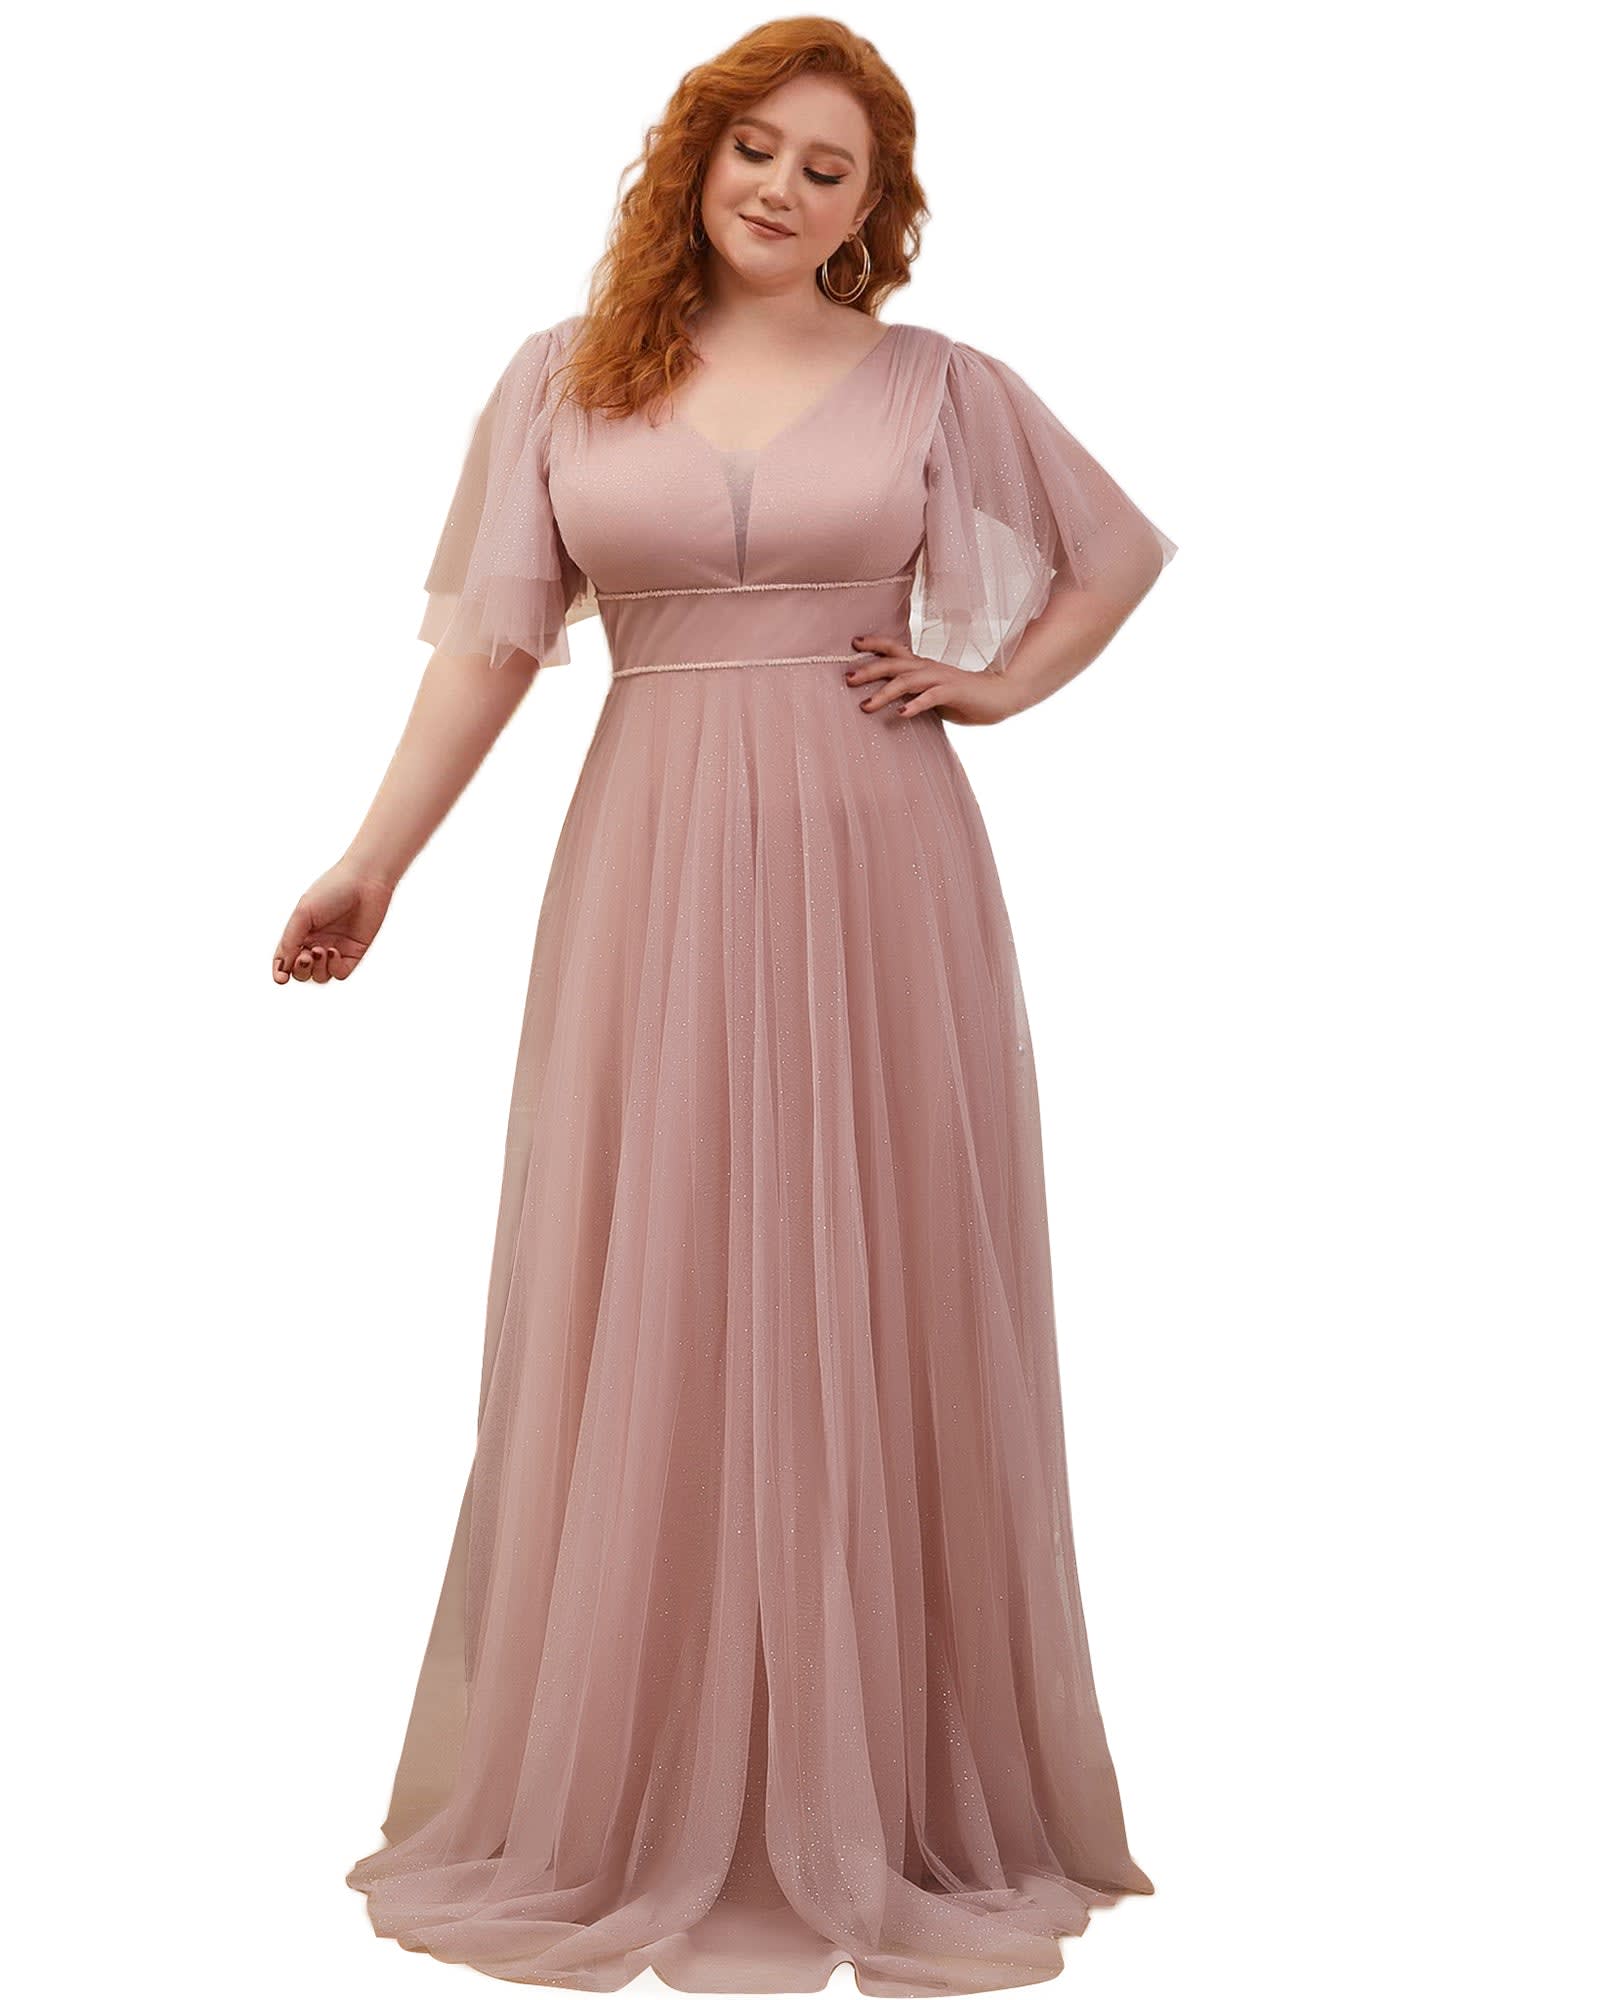 Light Pink Dress For Wedding